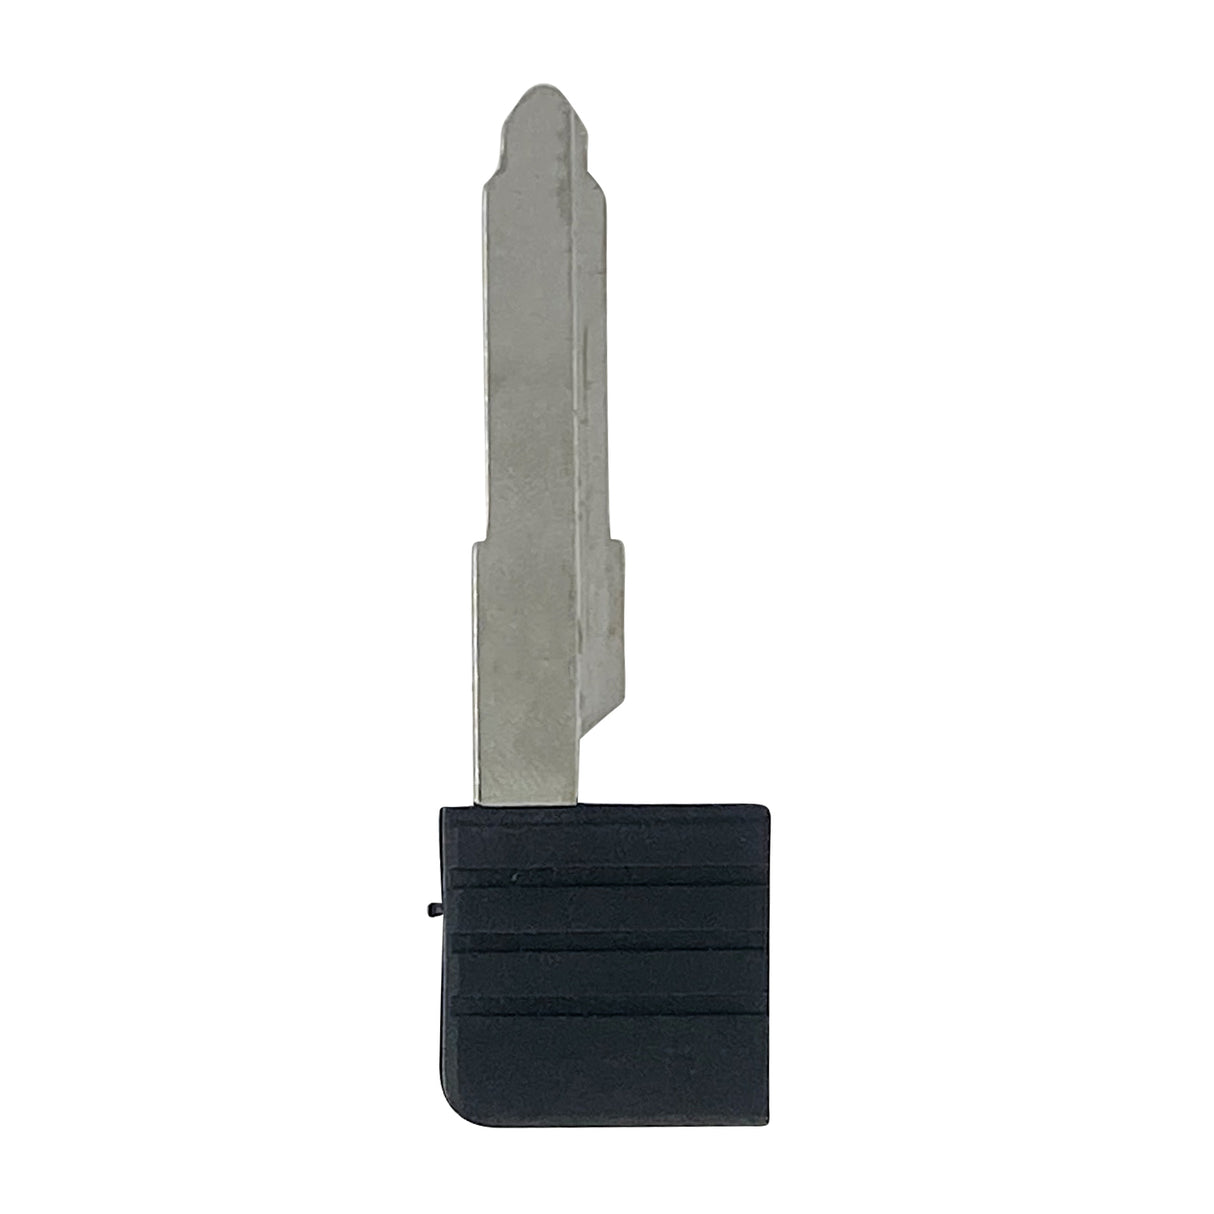 INSERT for 2004-2011 Mazda Smart Card Key Blade with Transponder